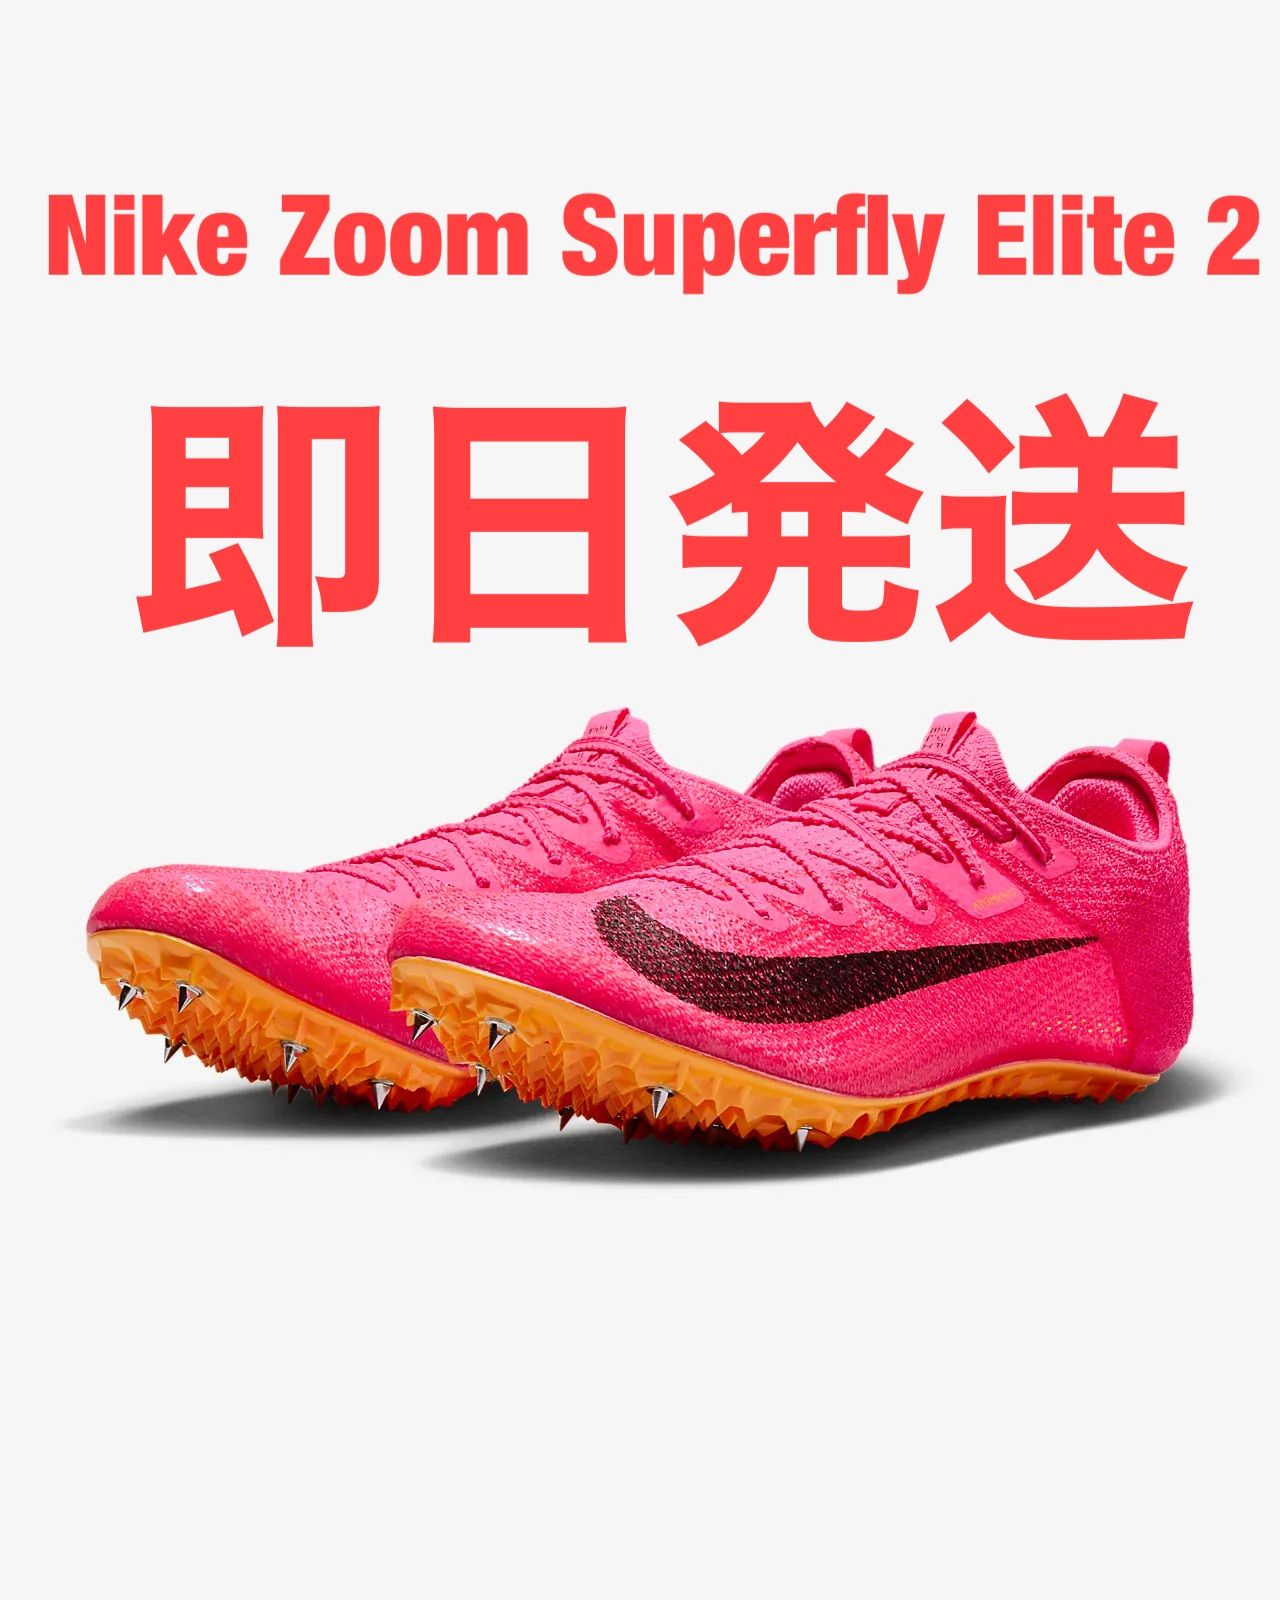 NIKE Zoom Superfly Elite 2 ズームスーパーフライ - その他スポーツ